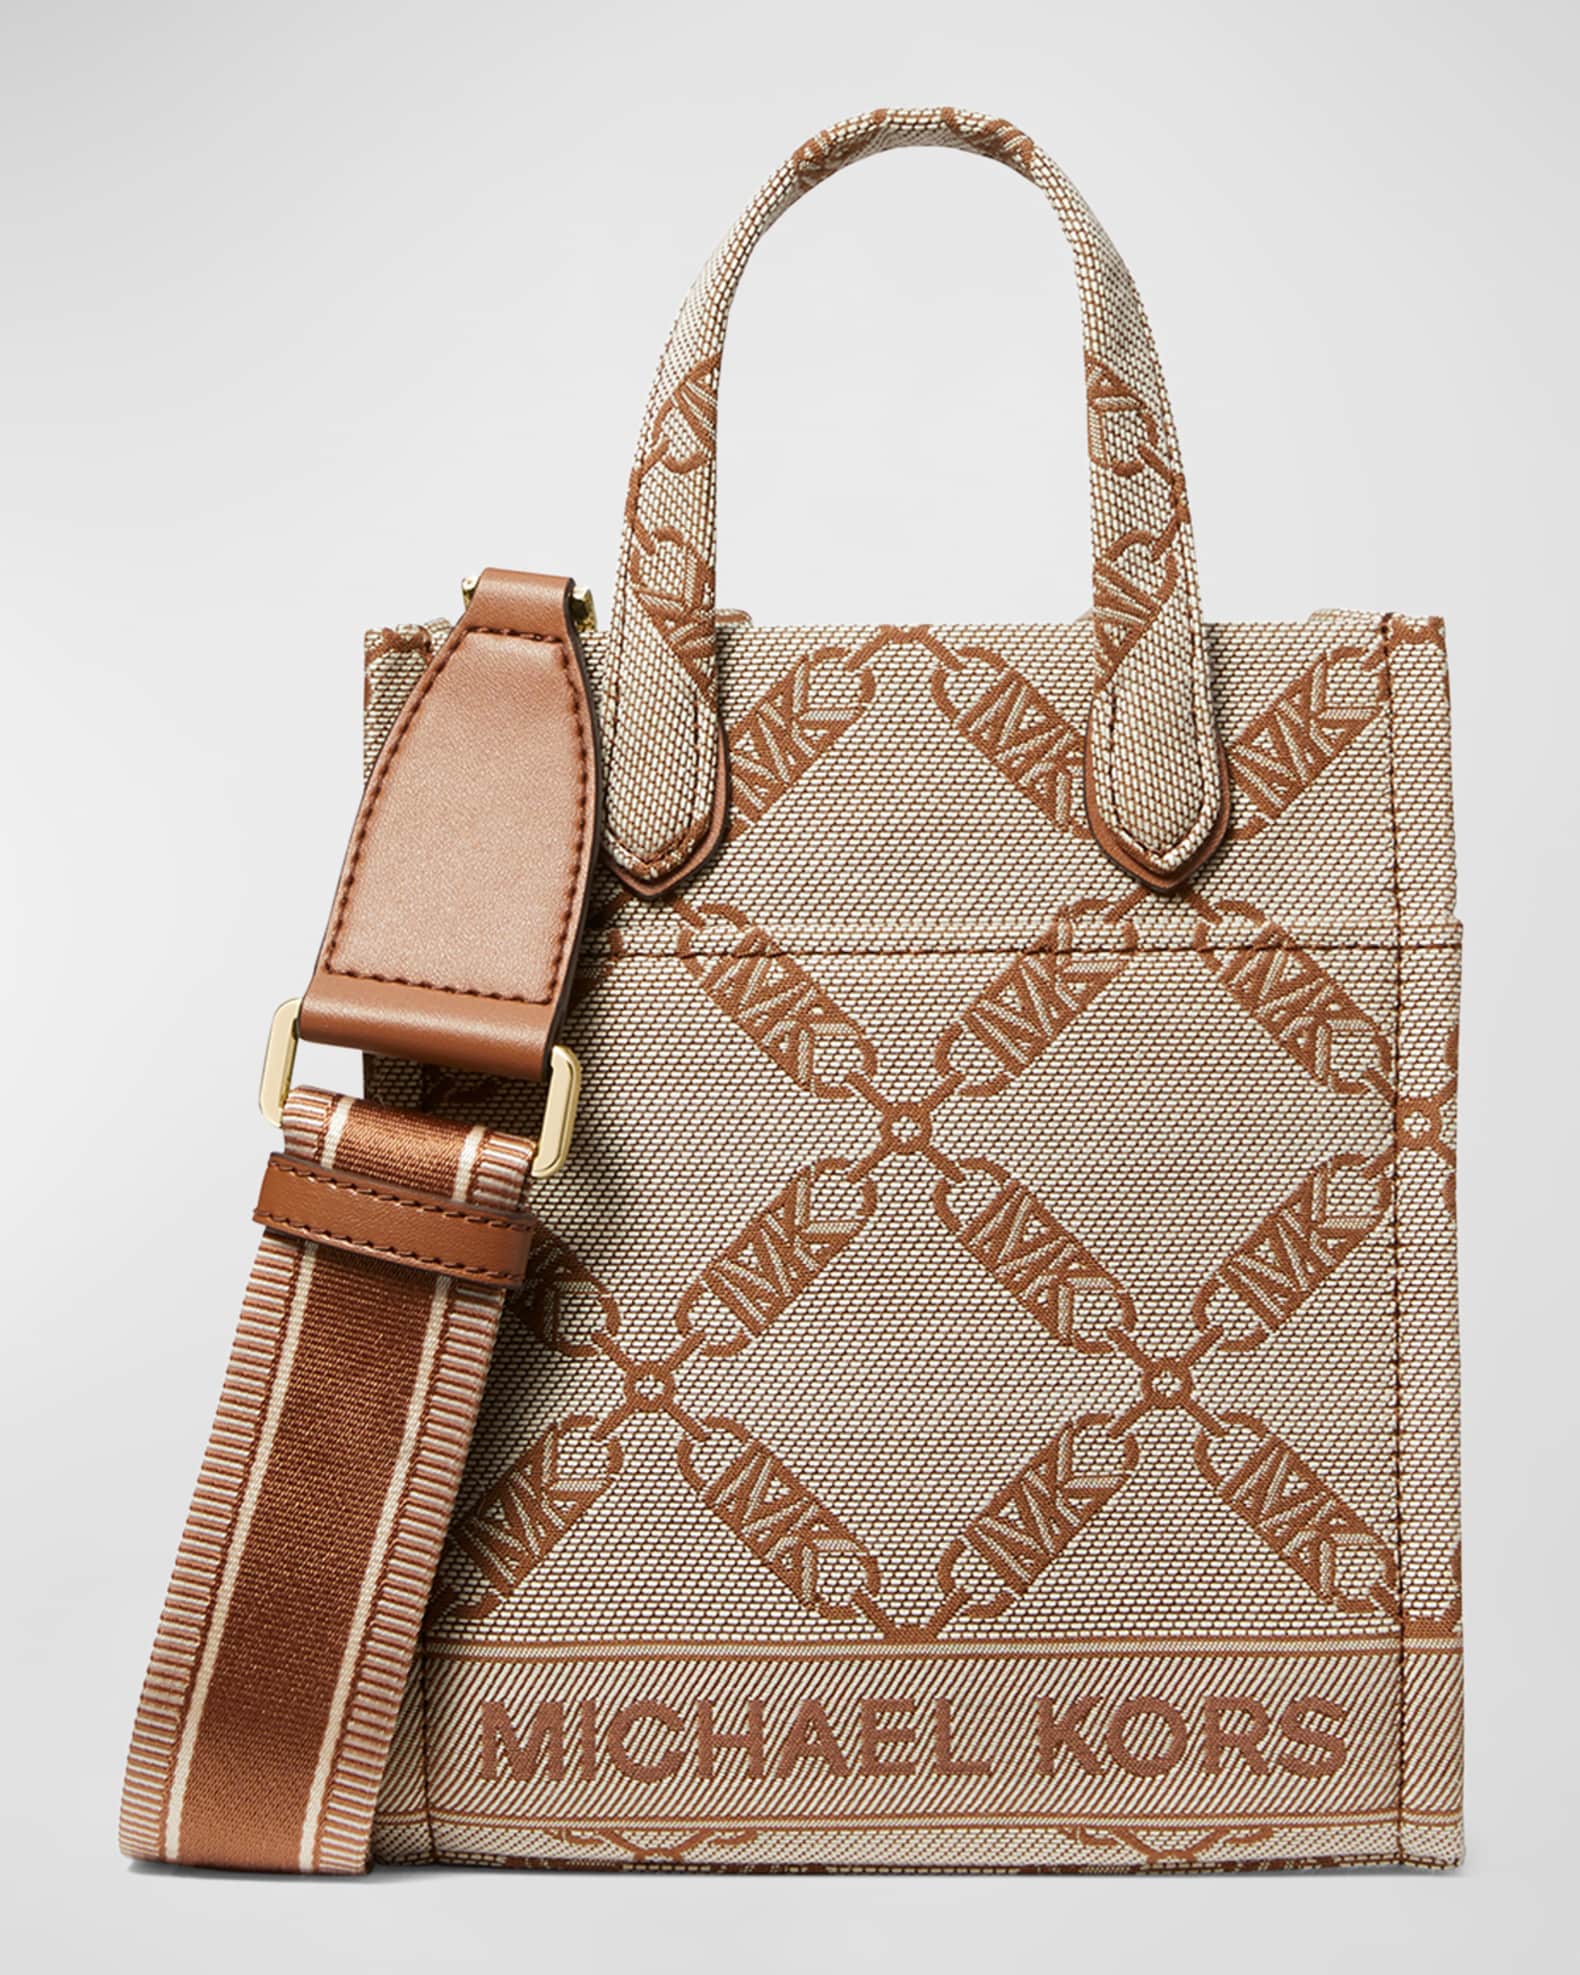 MICHAEL KORS: Michael camera bag in monogram canvas - Ivory